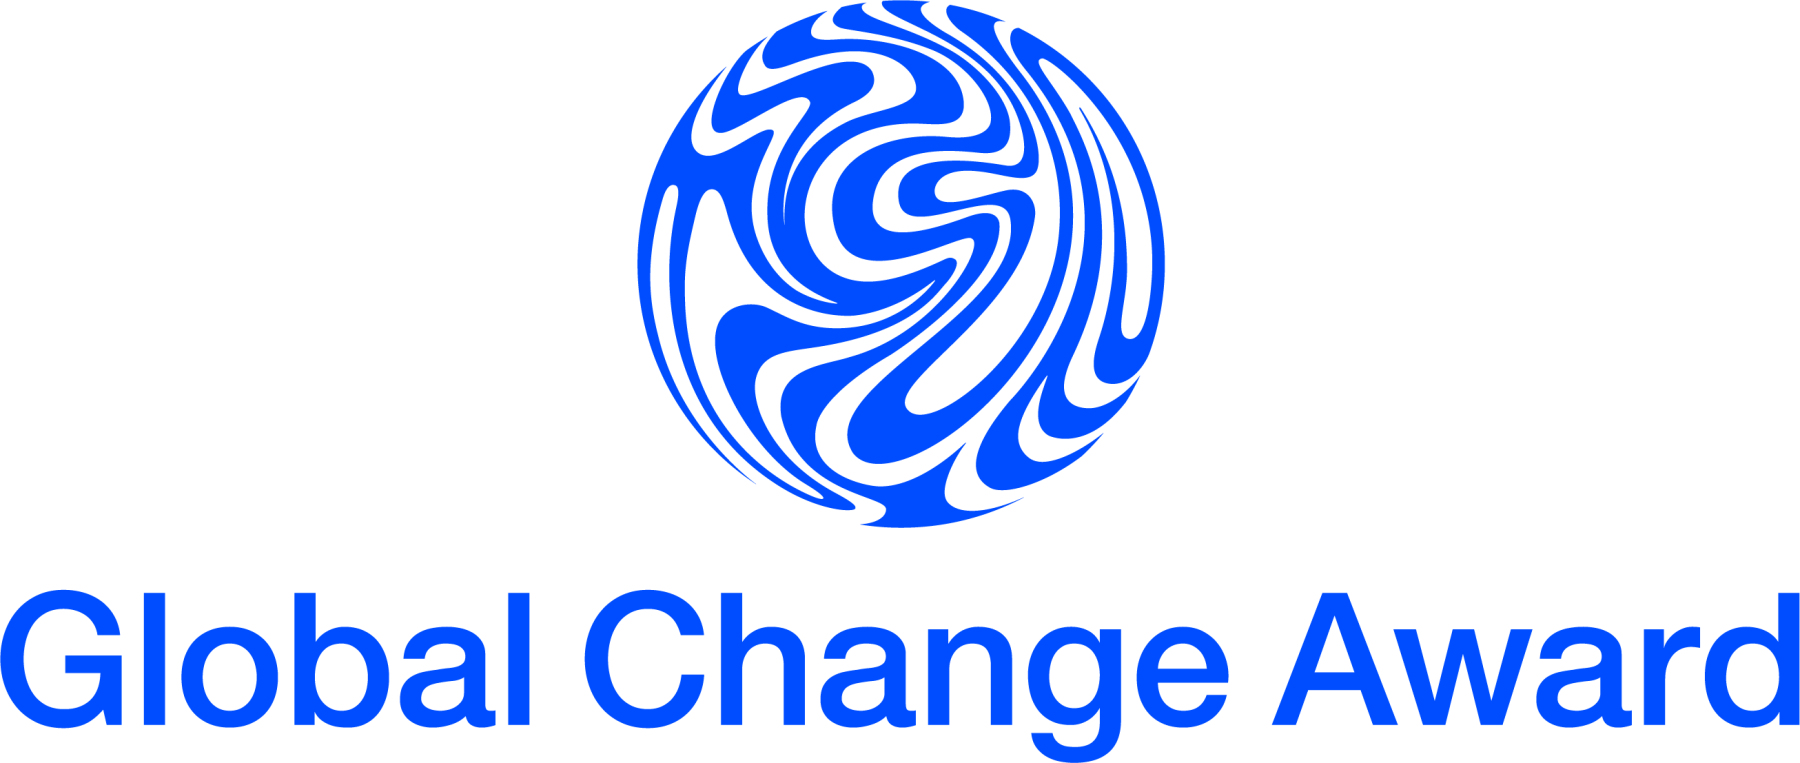 Global Change Award 